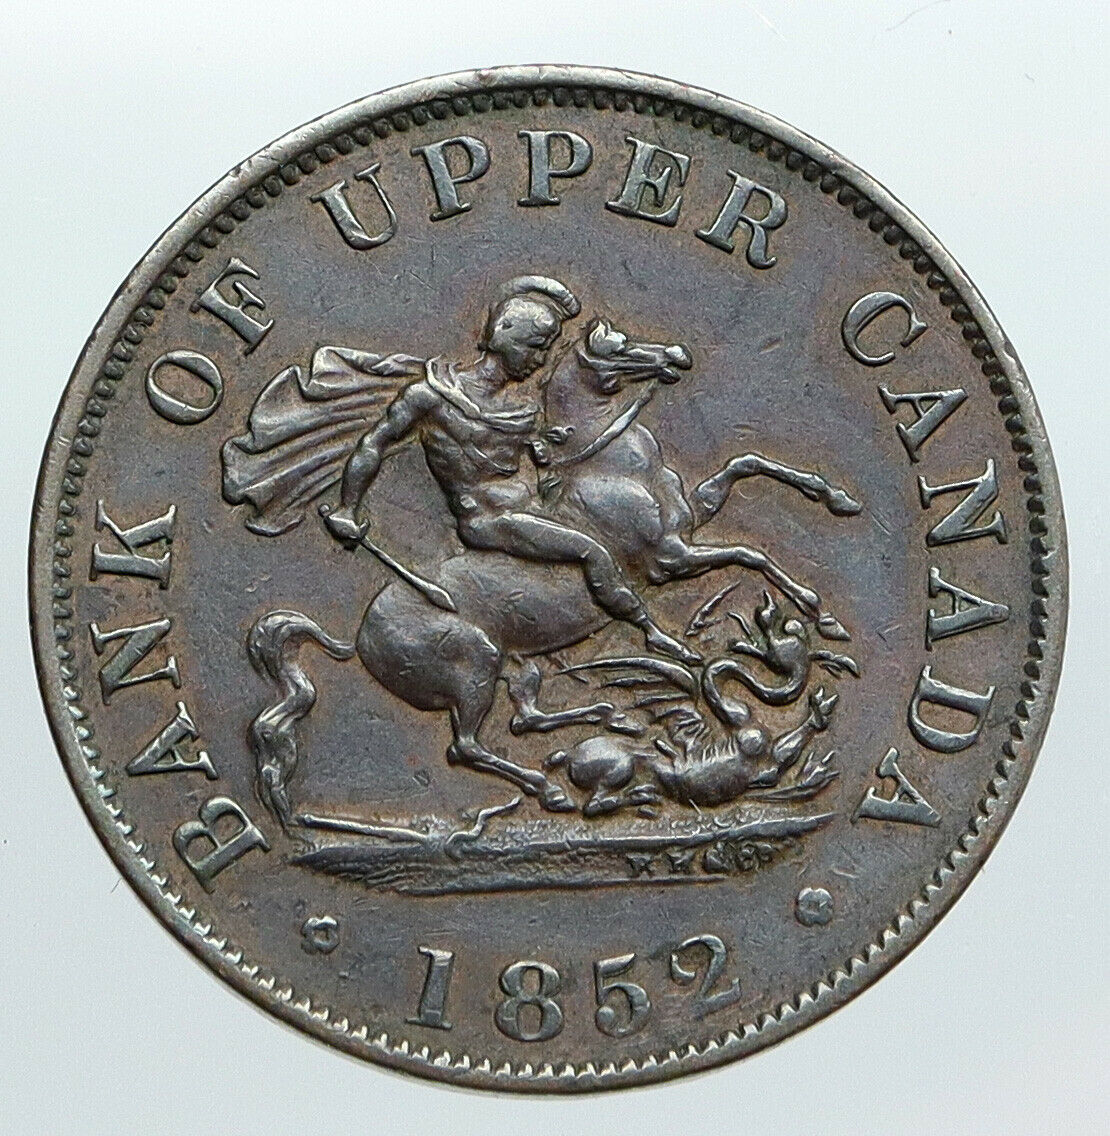 1852 UPPER CANADA Antique UK Queen Victoria HALF PENNY BANK TOKEN Coin i90535